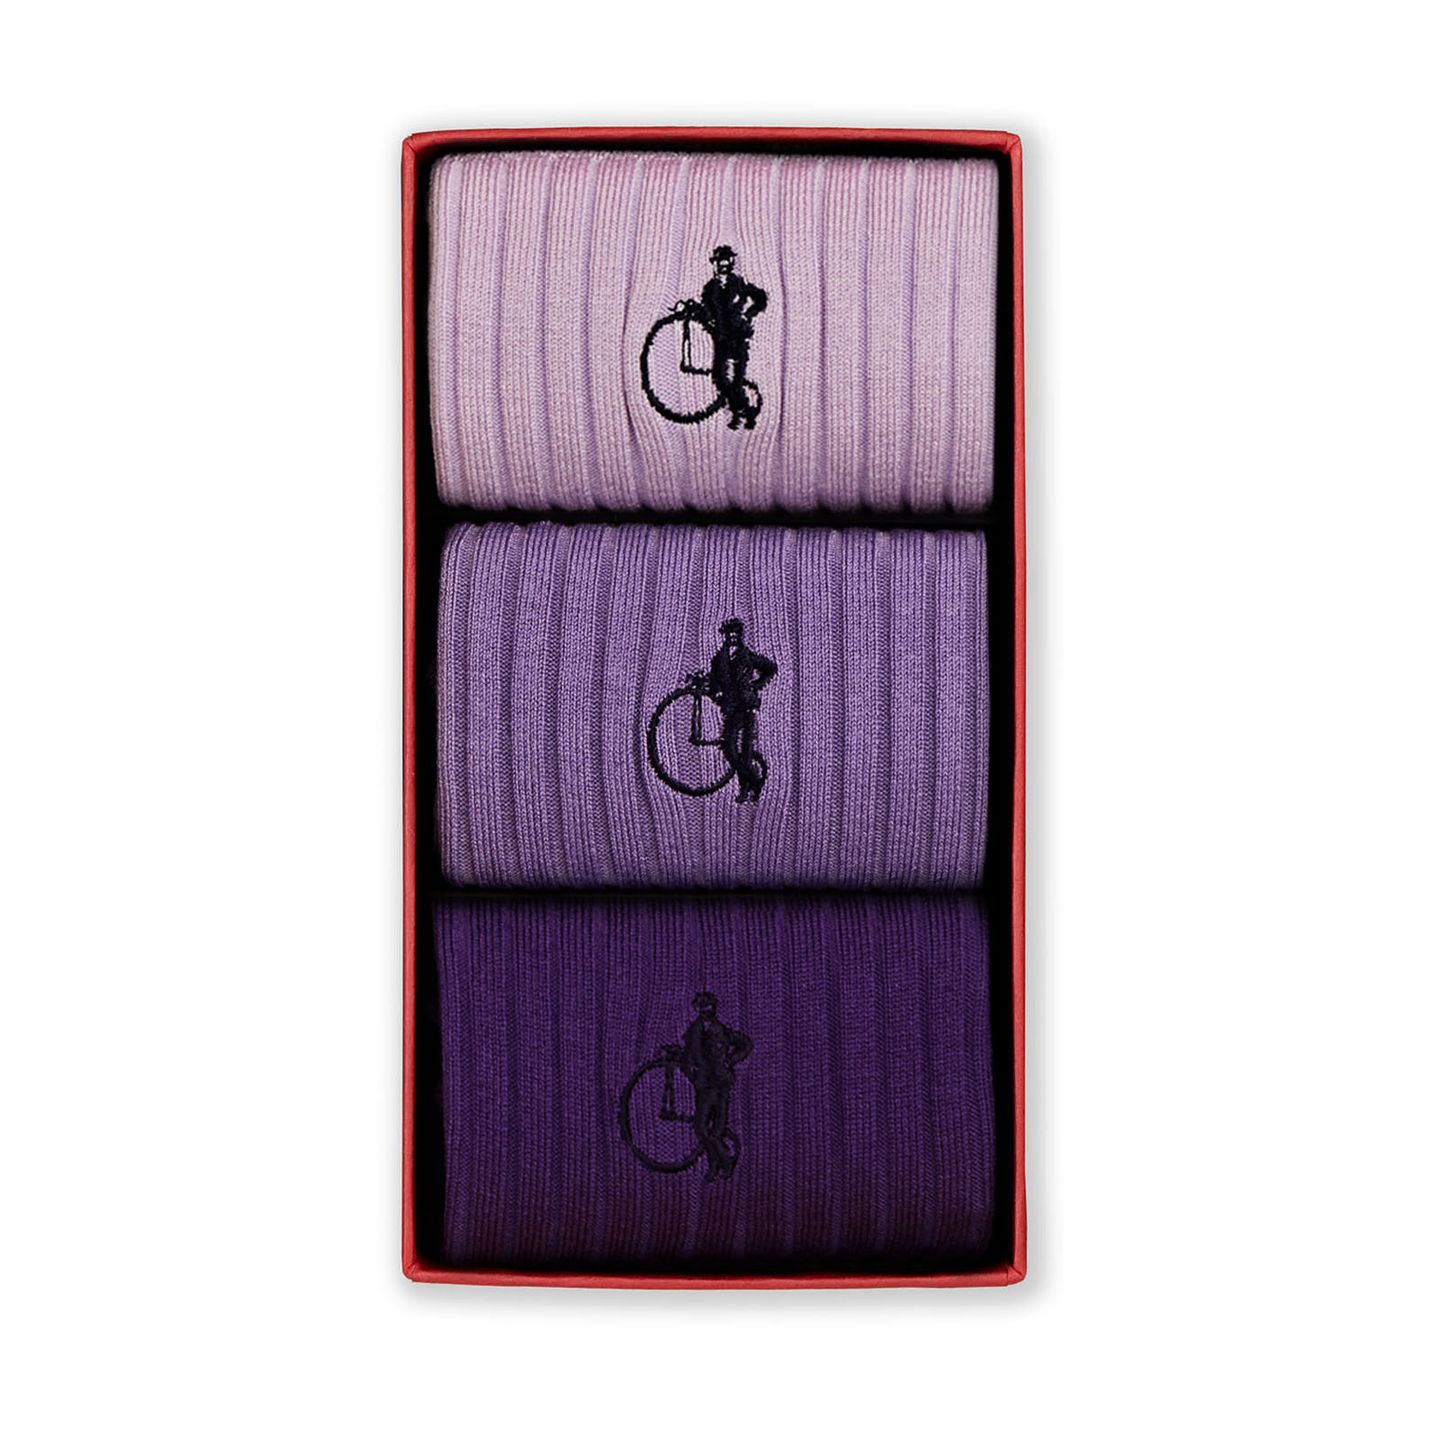 3 pair of purple socks in a box